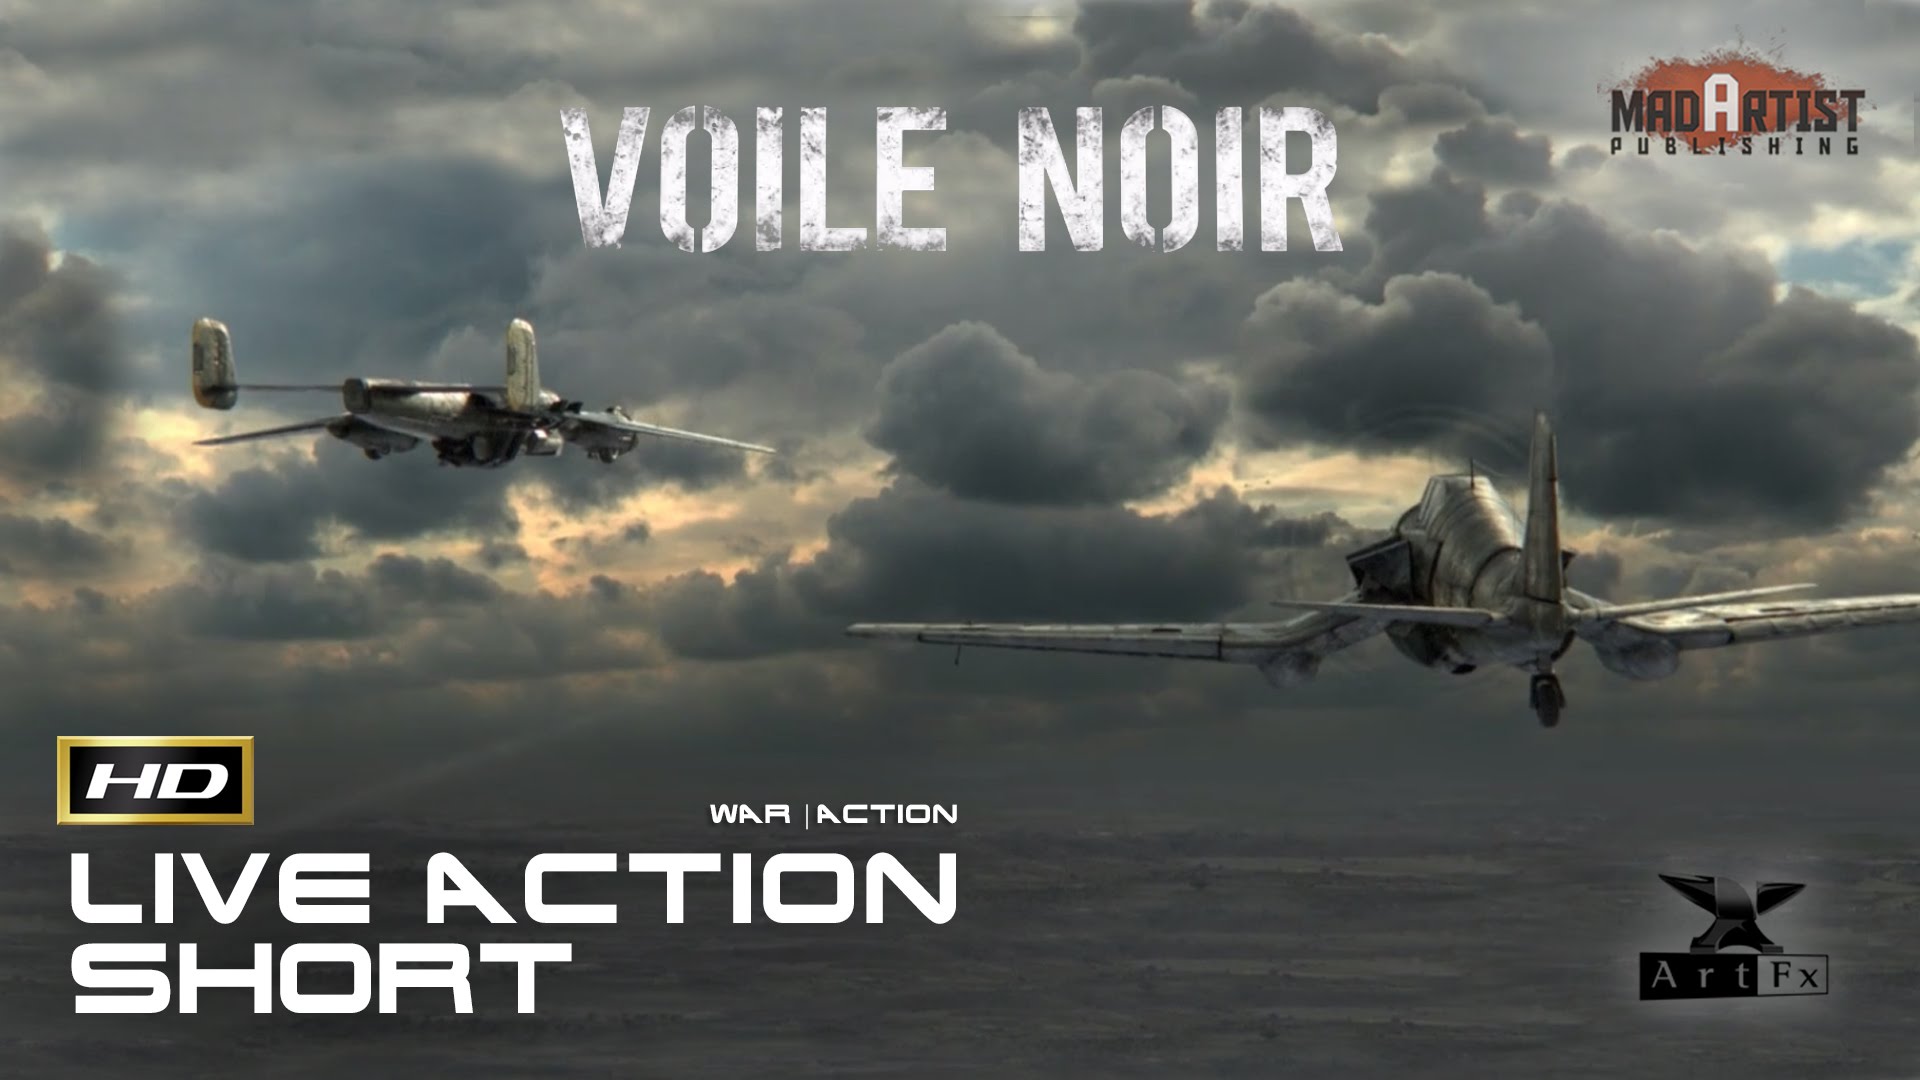 VOILE NOIR (HD) War Adventure in the Skies (CGI Live Action Short by ArtFx)